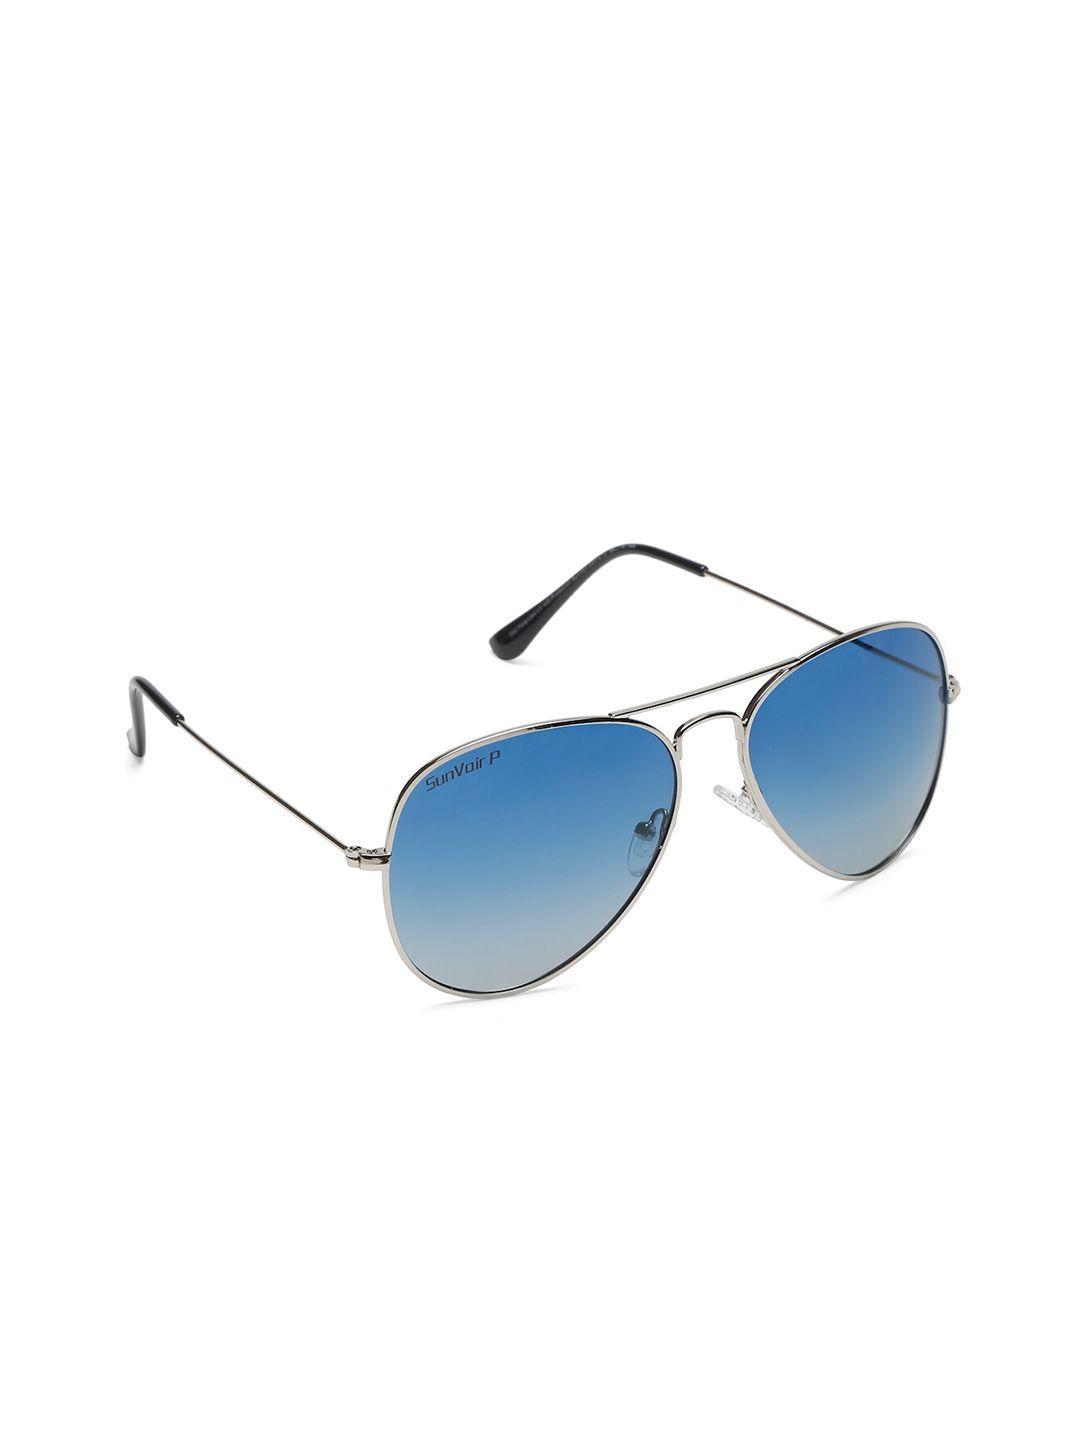 sunvoir unisex blue lens & silver-toned aviator sunglasses with polarised lens